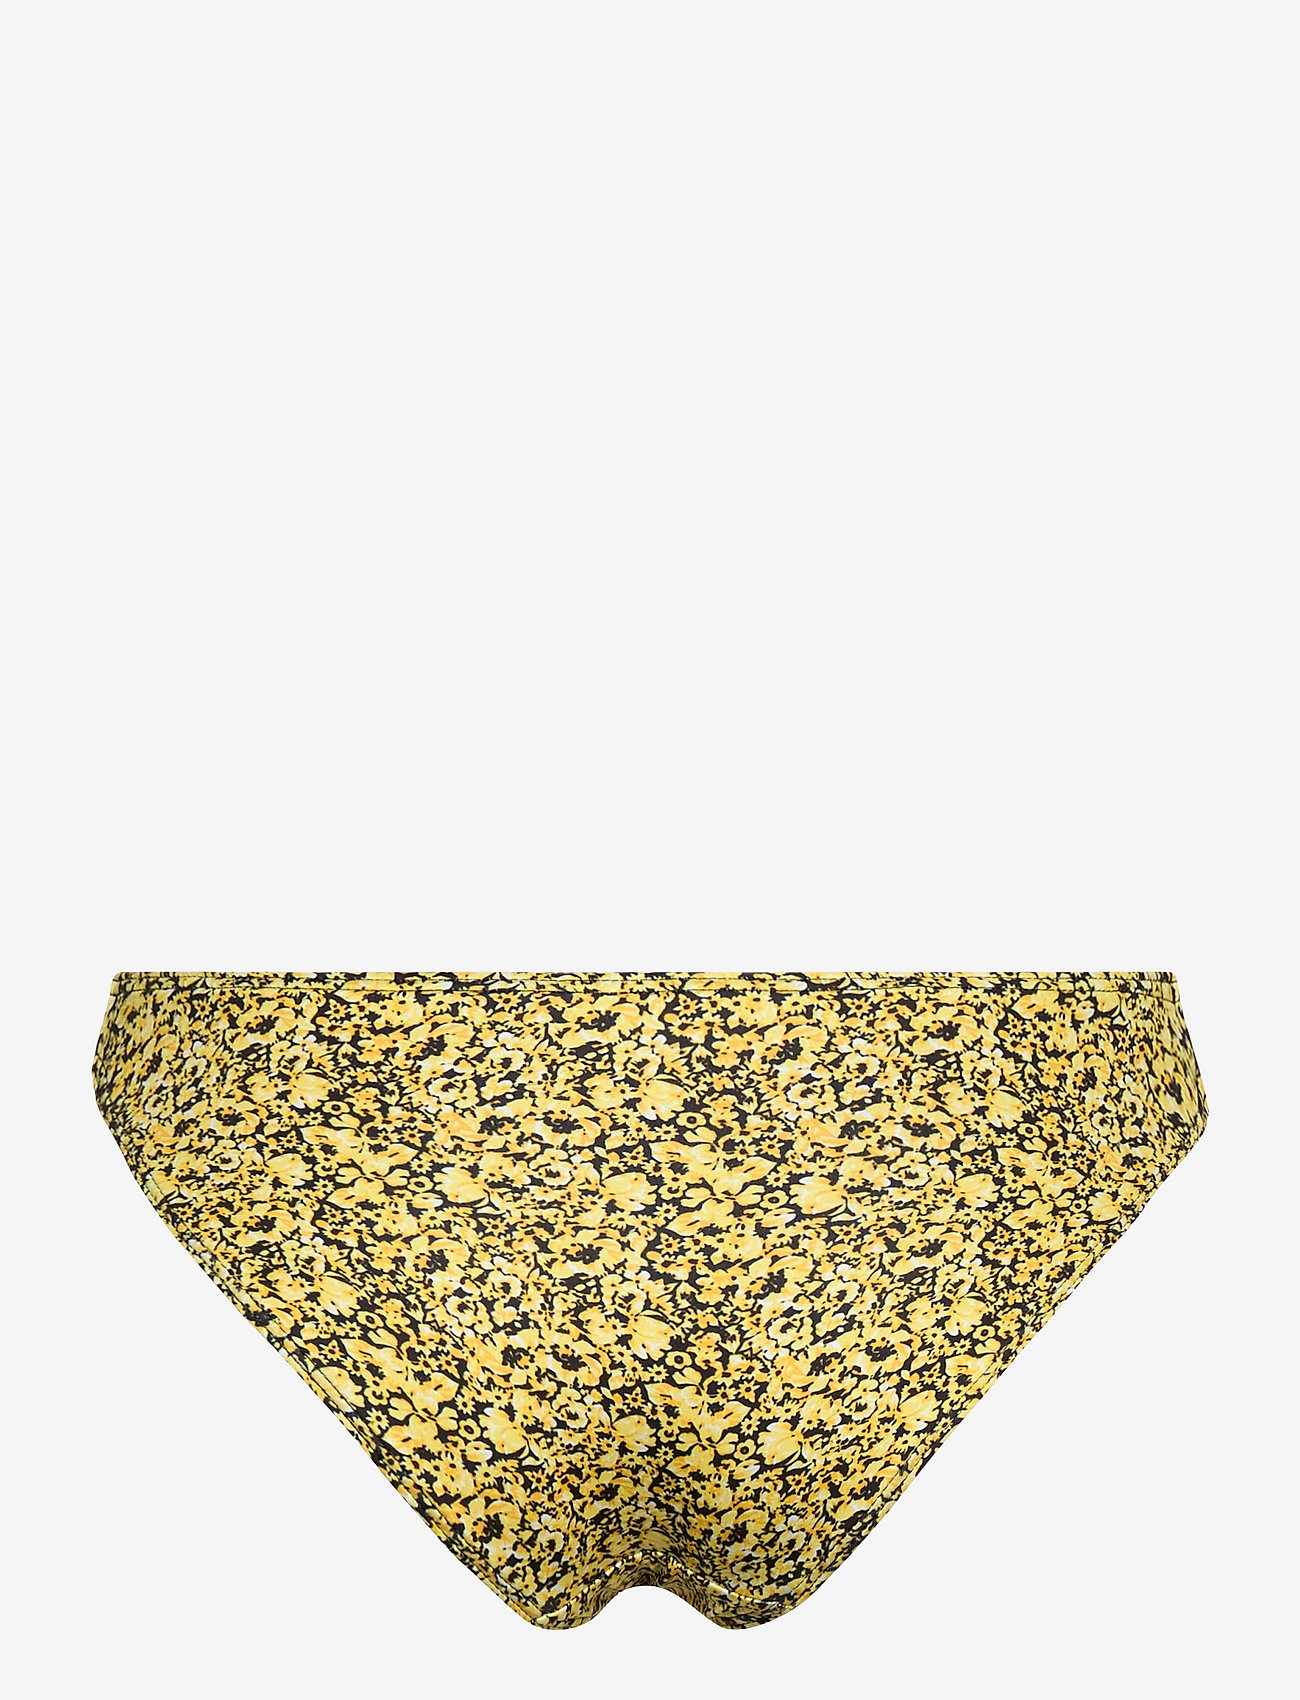 Gestuz - Cana GZ bikini bottom - bikini briefs - yellow mini flower - 1